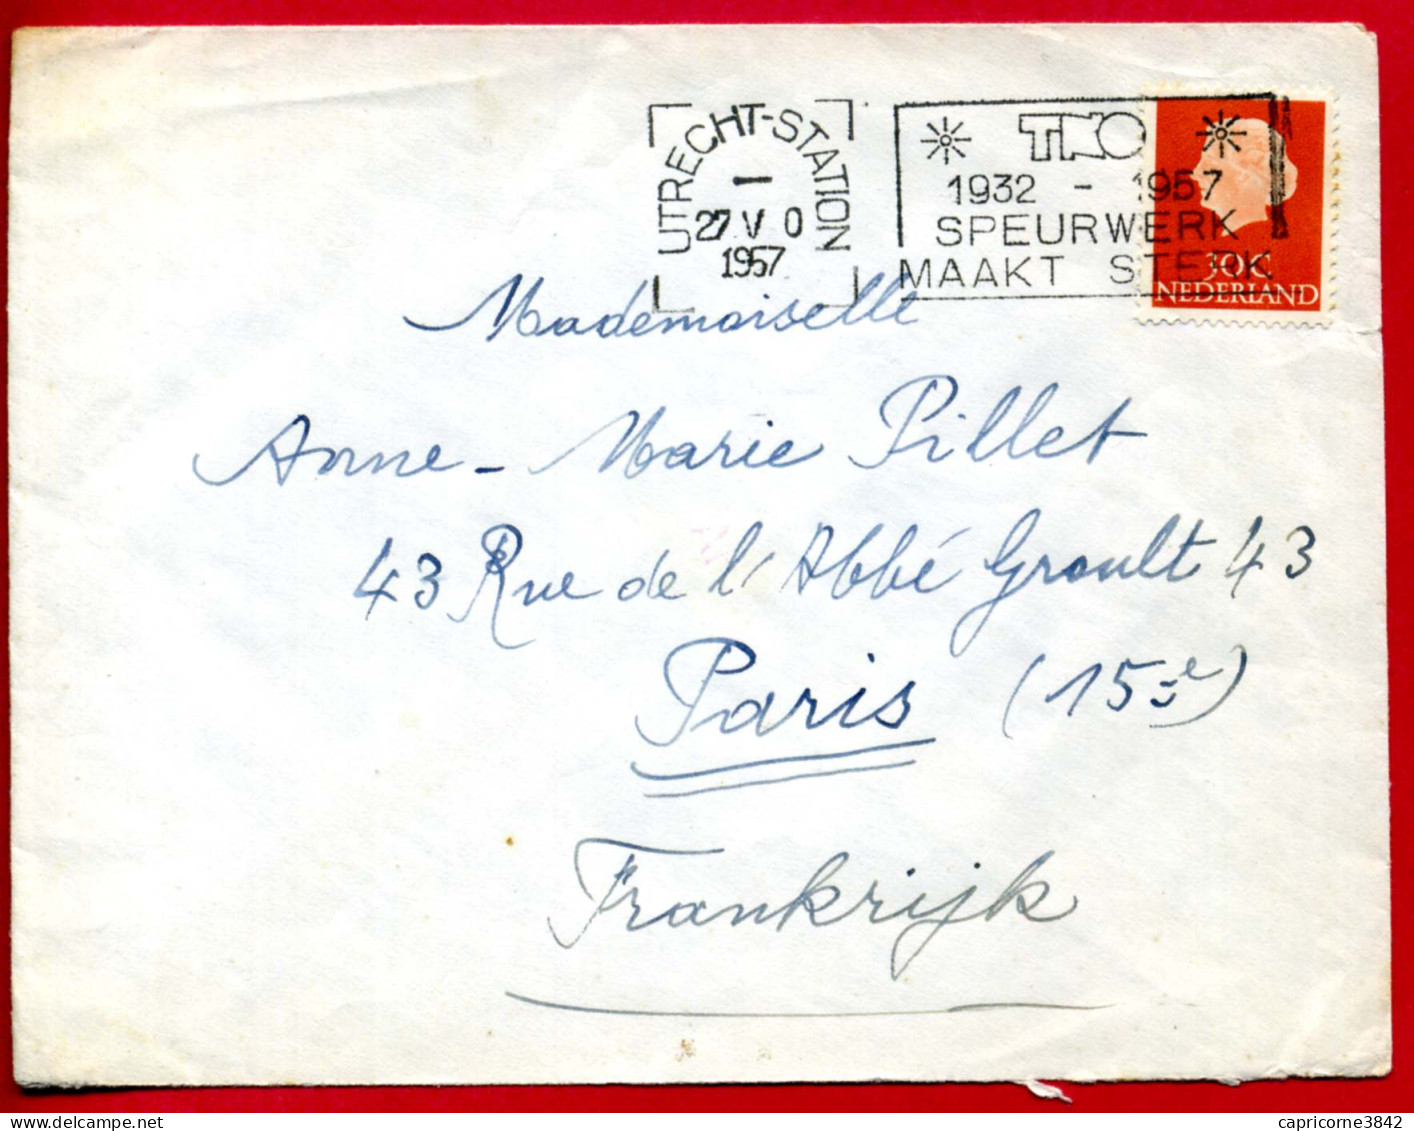 1957 - Pays Bas - Cachet ULTRECHT-STATION - "TNO - 1932-1957 - SPEURWERK MAAKT STERK" - Marcophilie